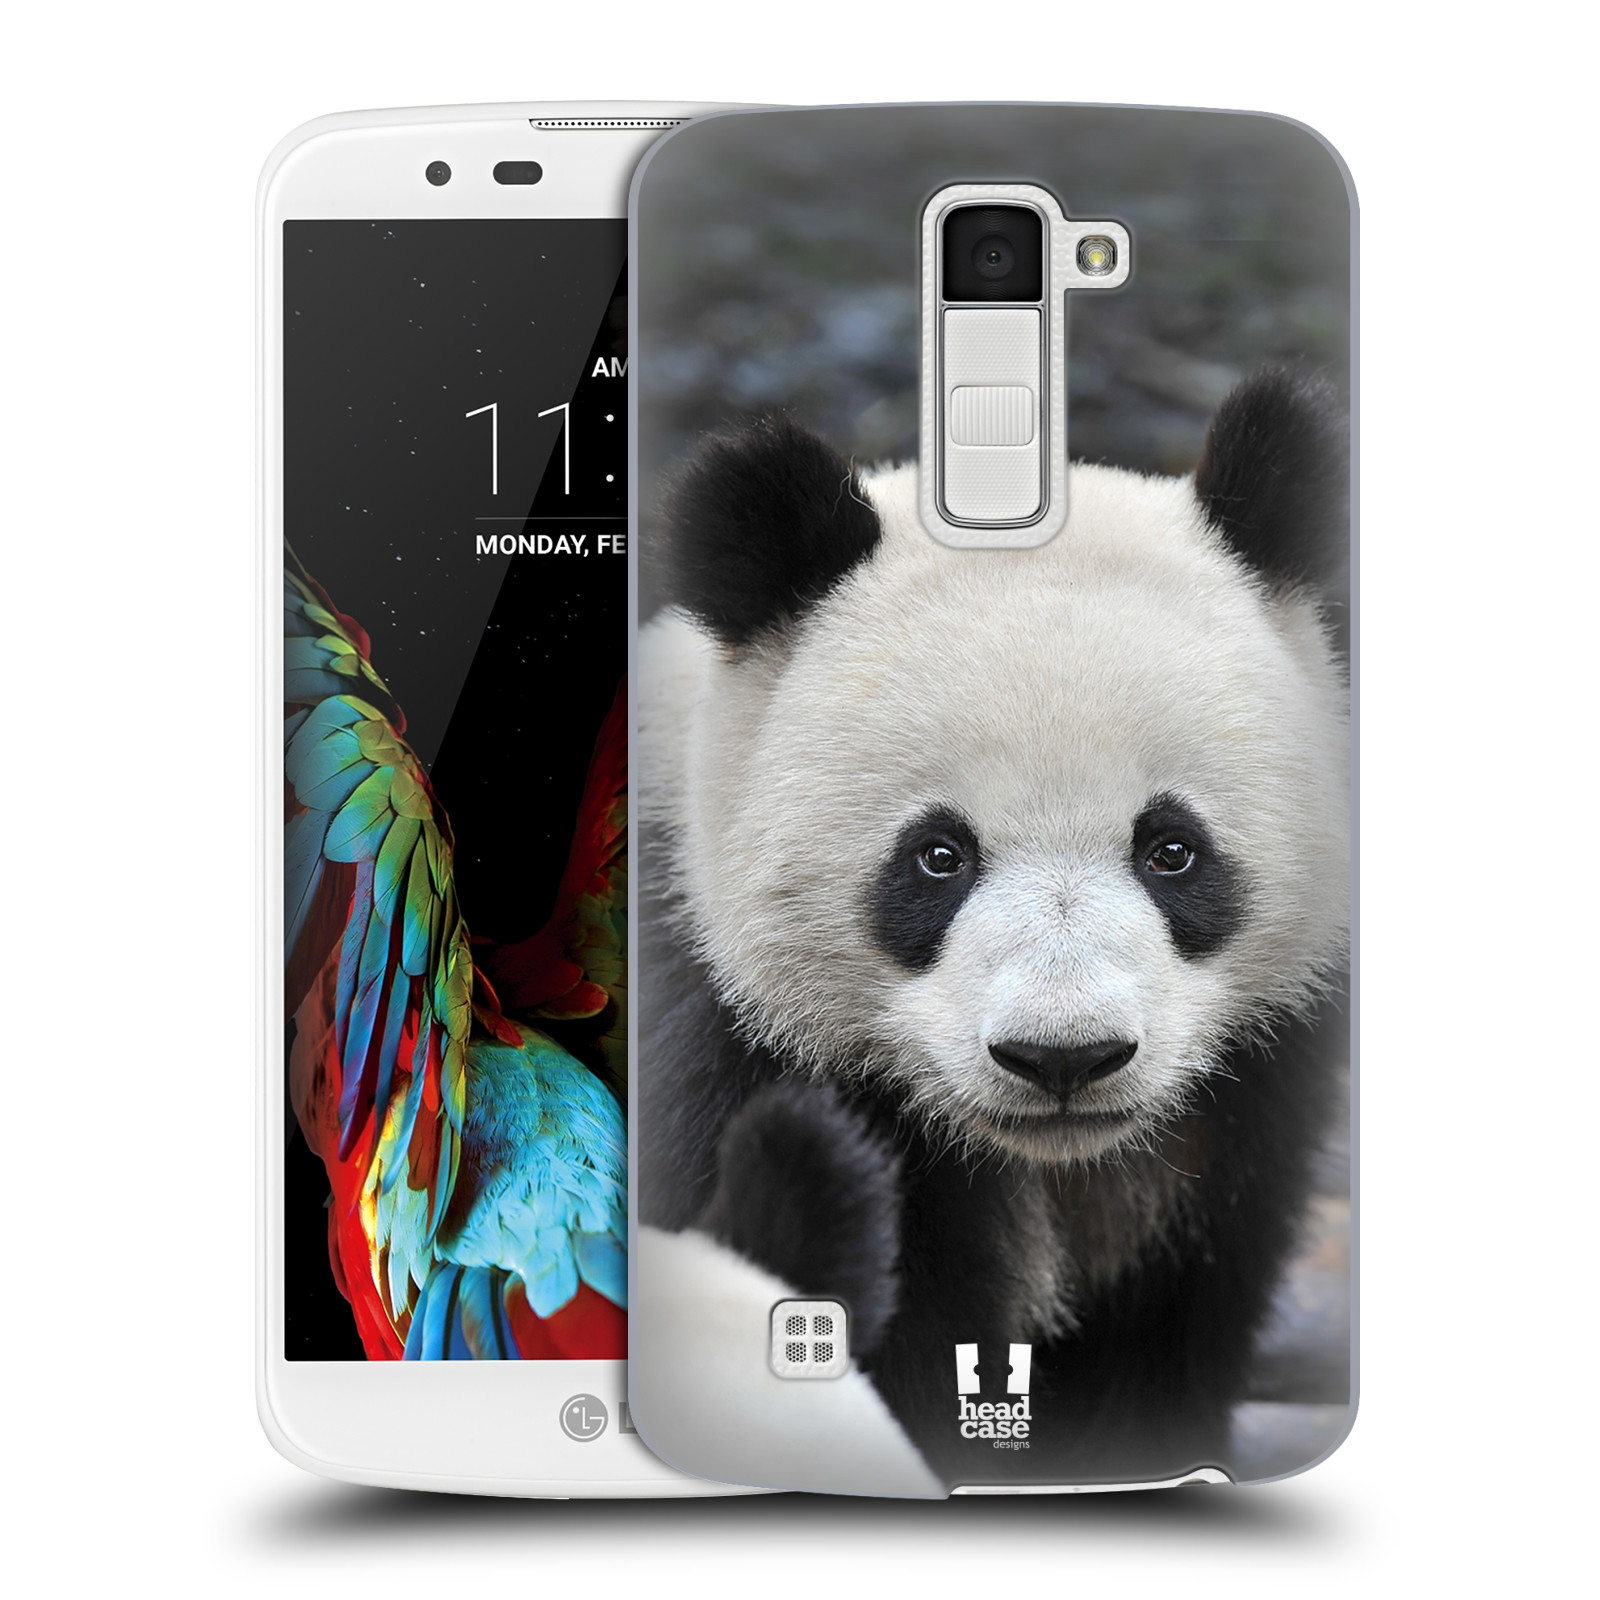 HEAD CASE plastový obal na mobil LG K10 vzor Divočina, Divoký život a zvířata foto MEDVĚD PANDA